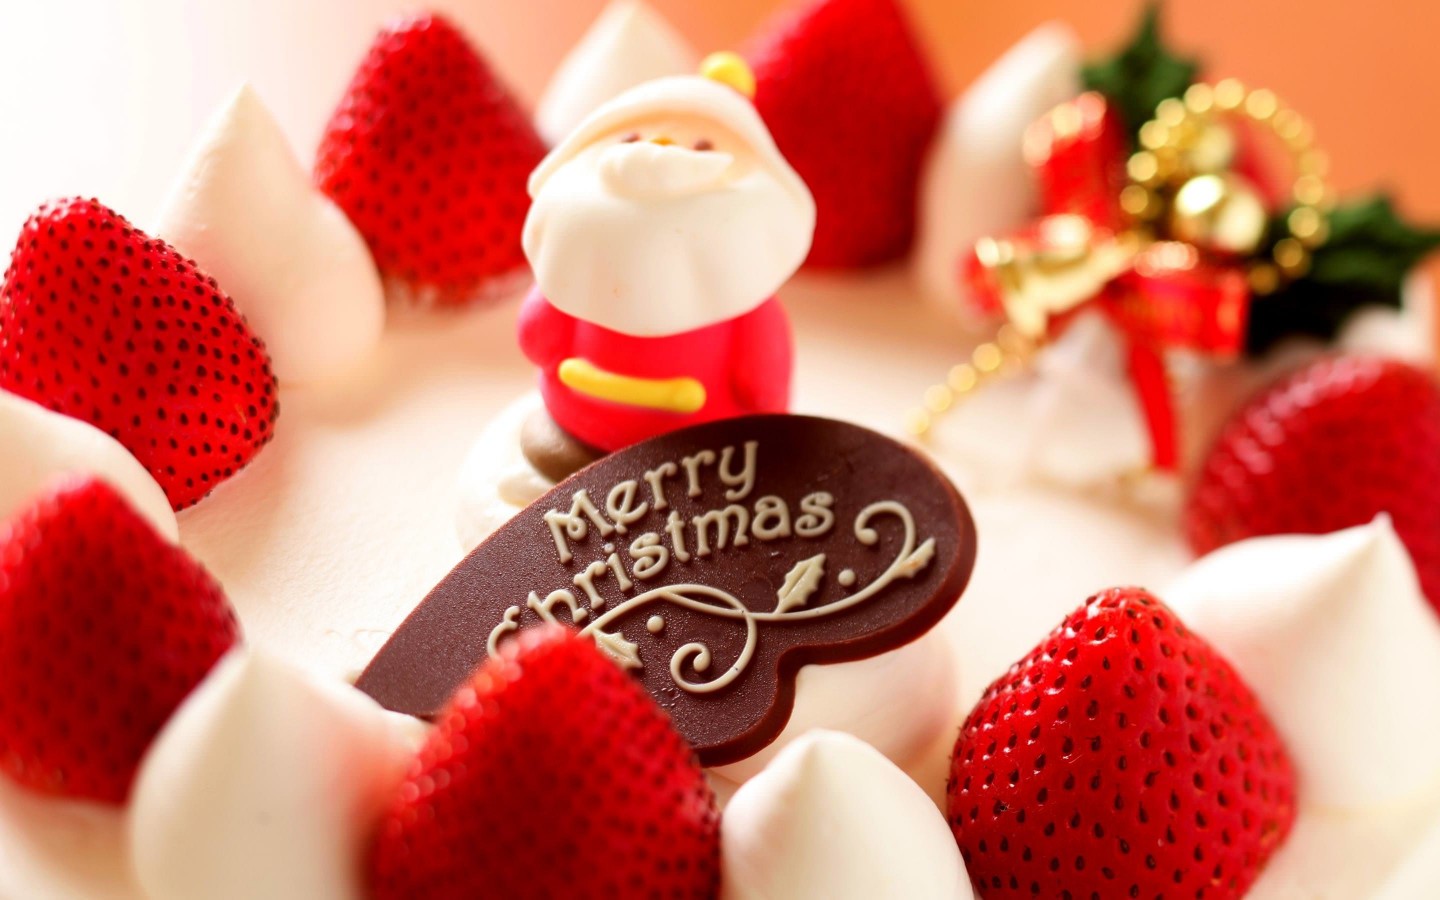 Merry Christmas Strawberry Dessert Wallpaper for Desktop 1440x900